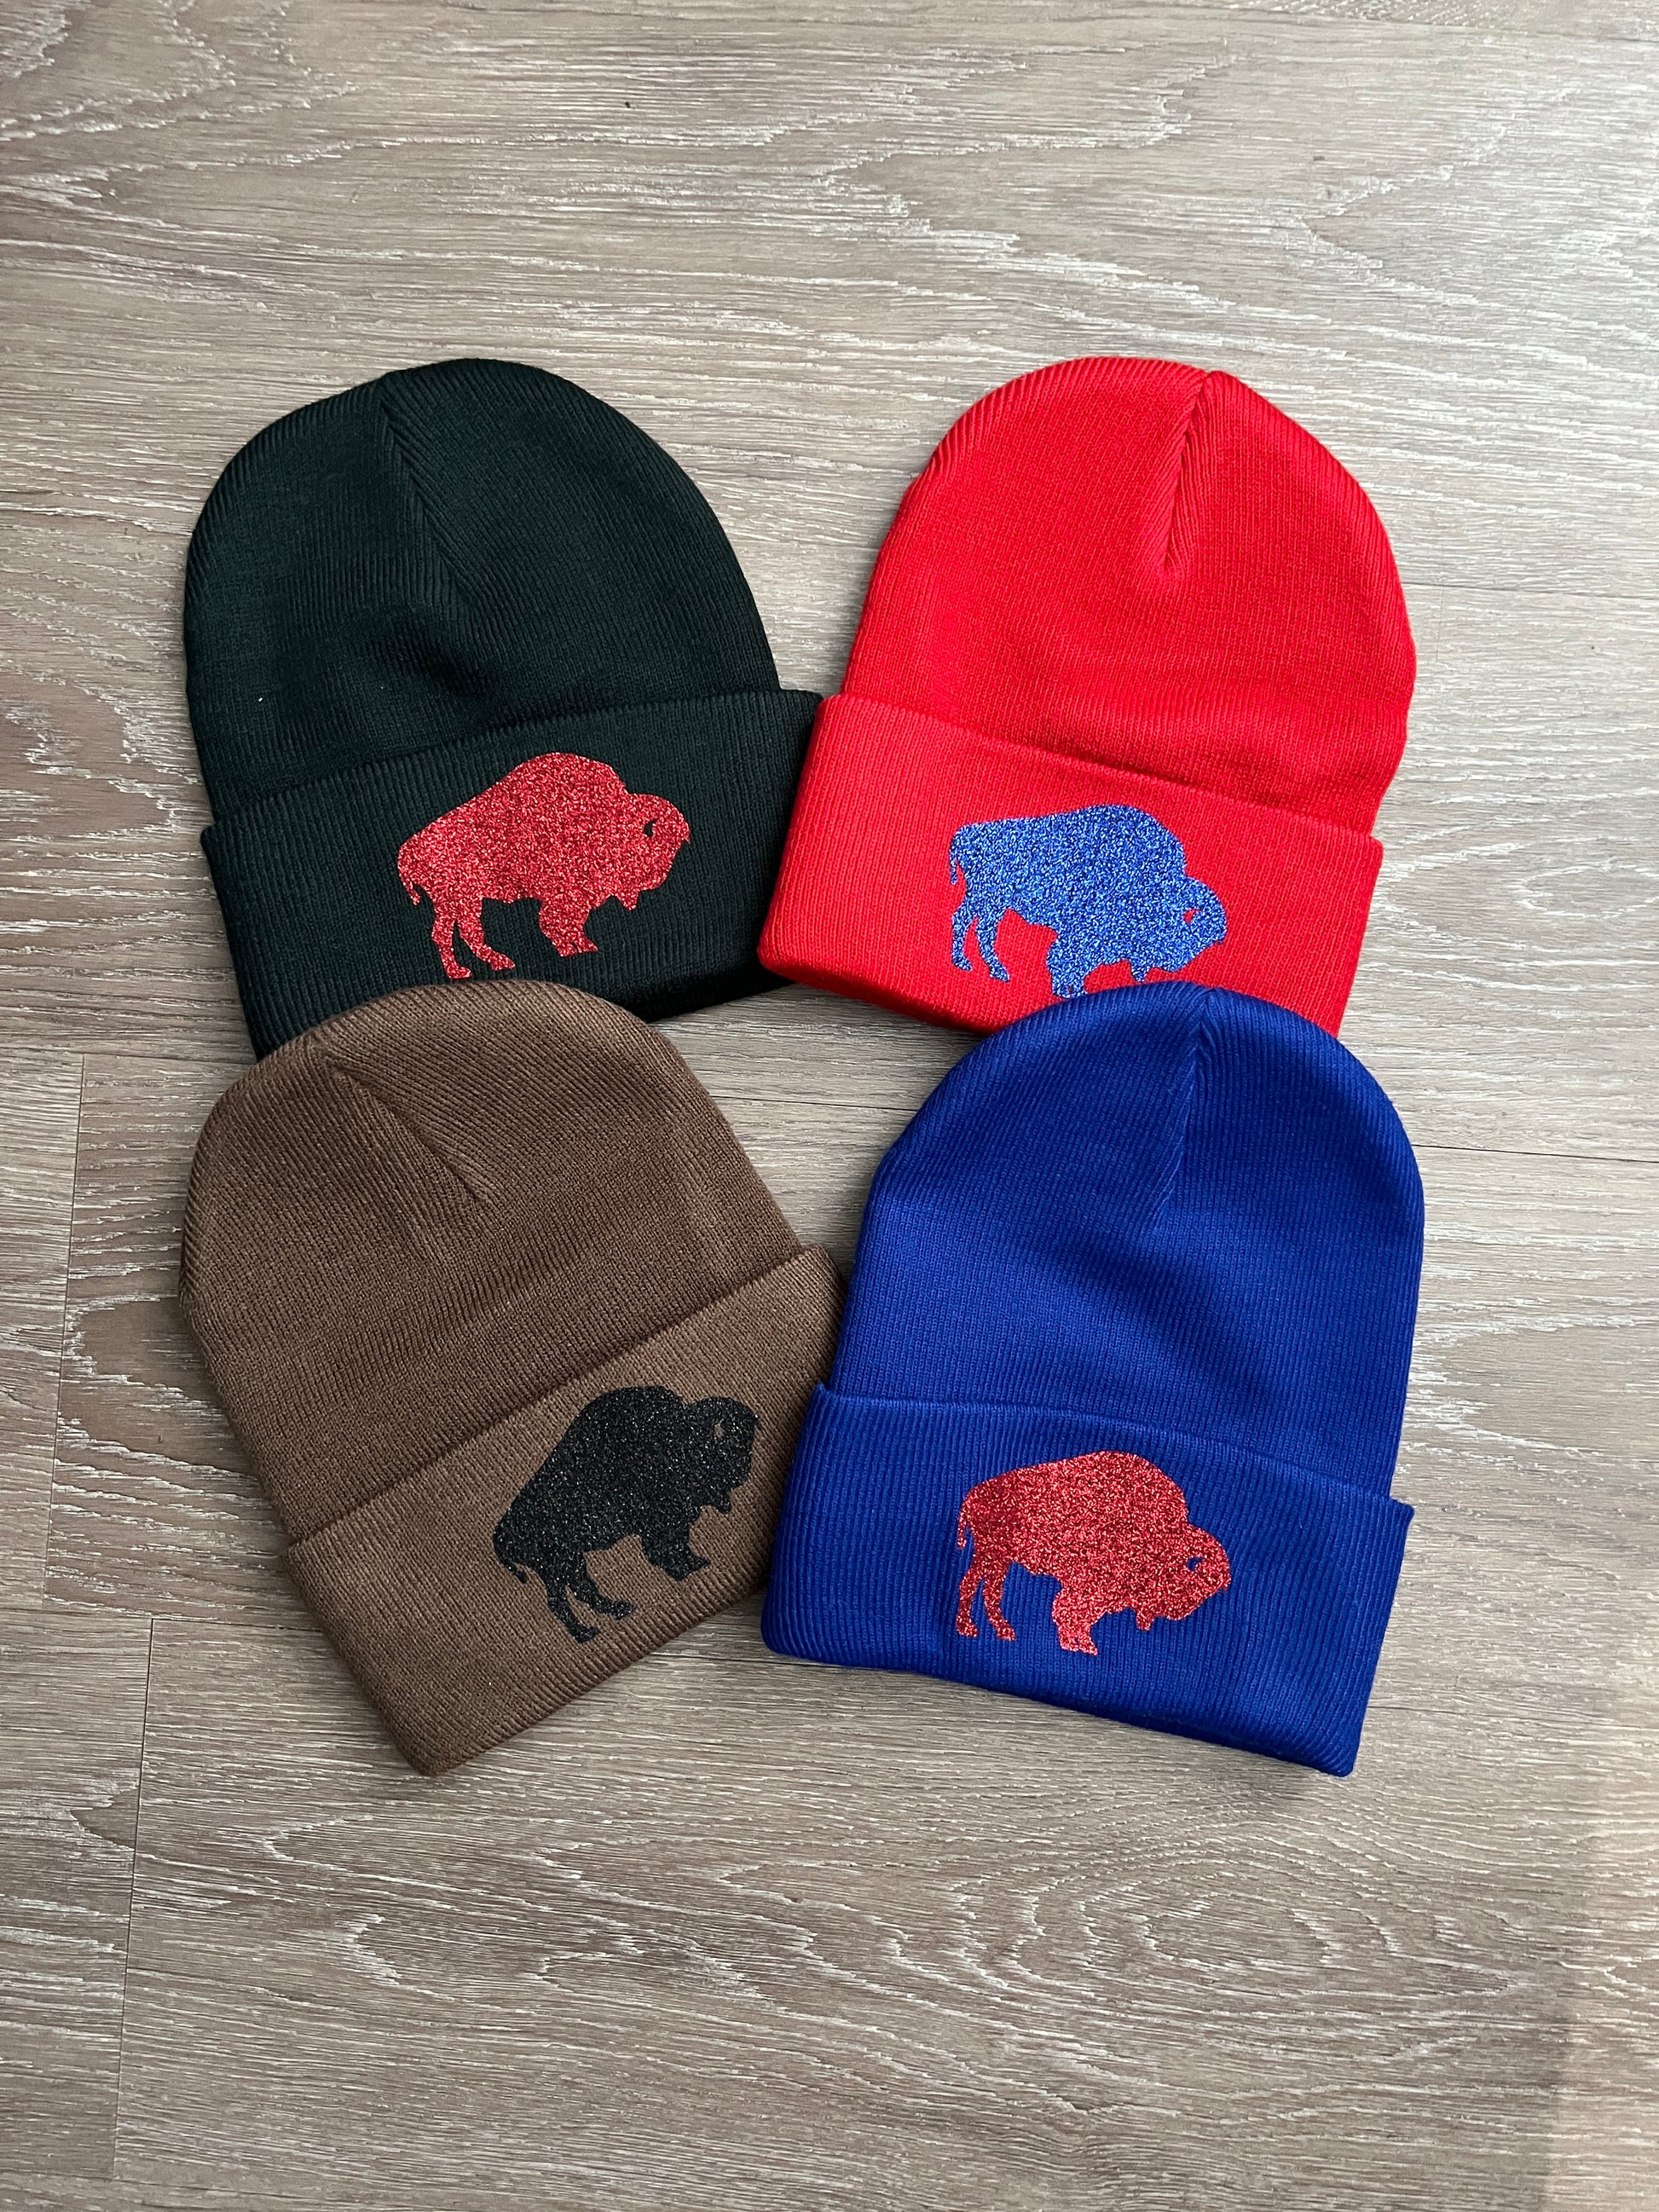 buffalo bills knit hat